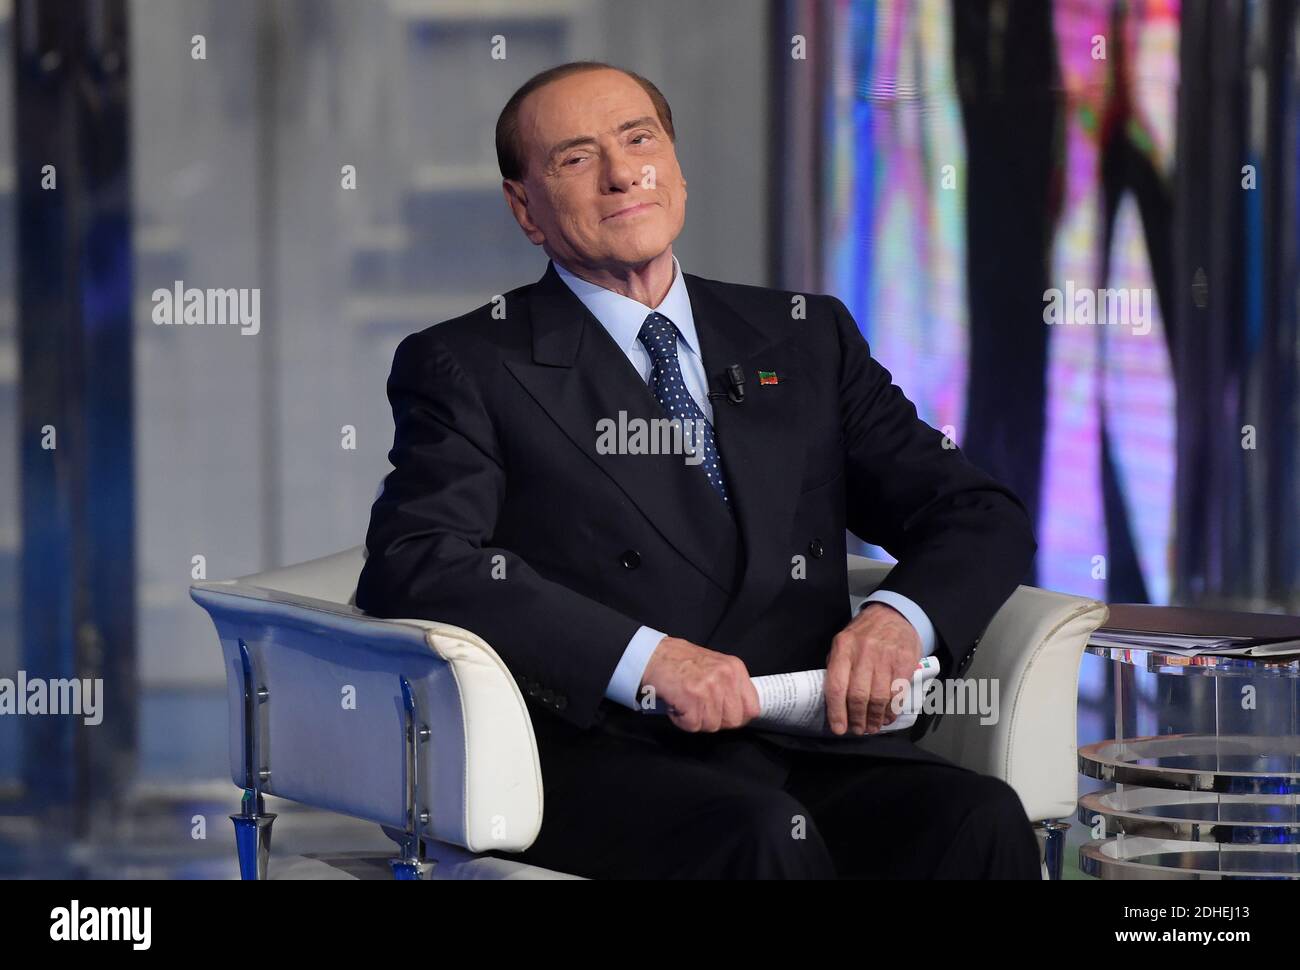 Former Italian Prime Minister Silvio Berlusconi attends the political TV  show Porta A Porta at RAI's broadcast studios in Rome, Italy on November  16, 2017. At age 81, Berlusconi hopes to make